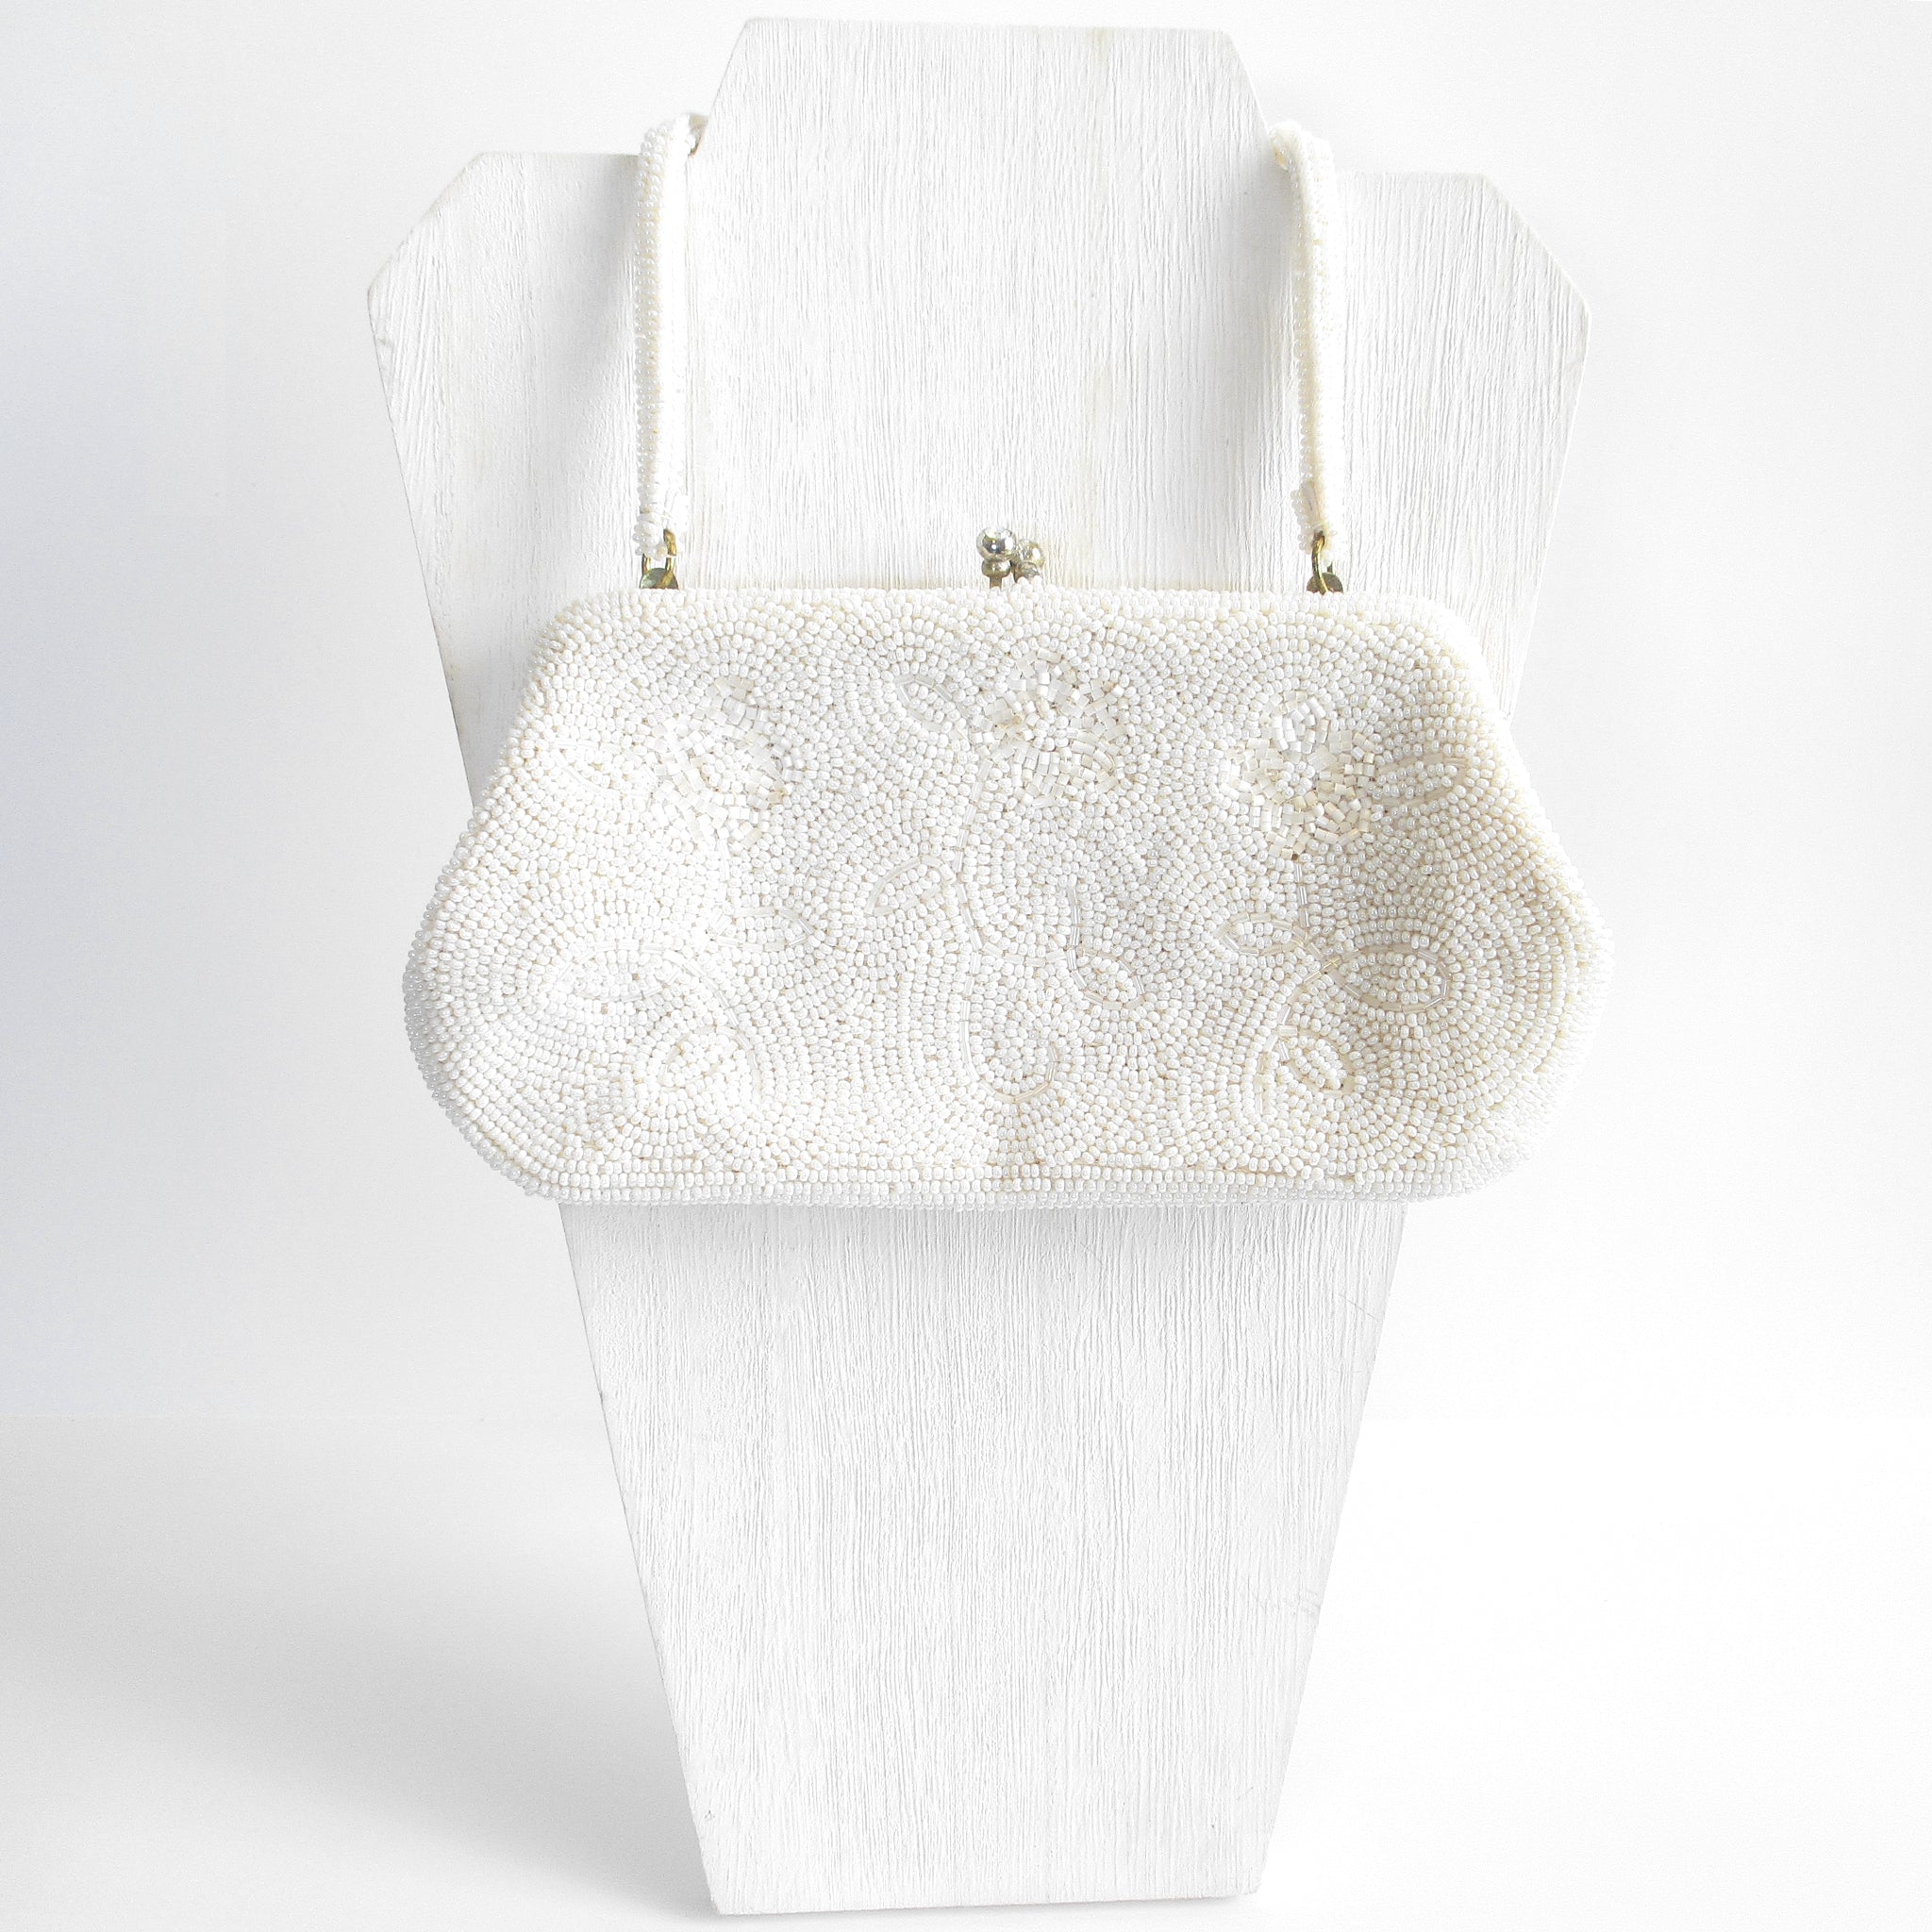 Rich 1950s Beaded Evening Bag - White & Ivory Beadwork Formal